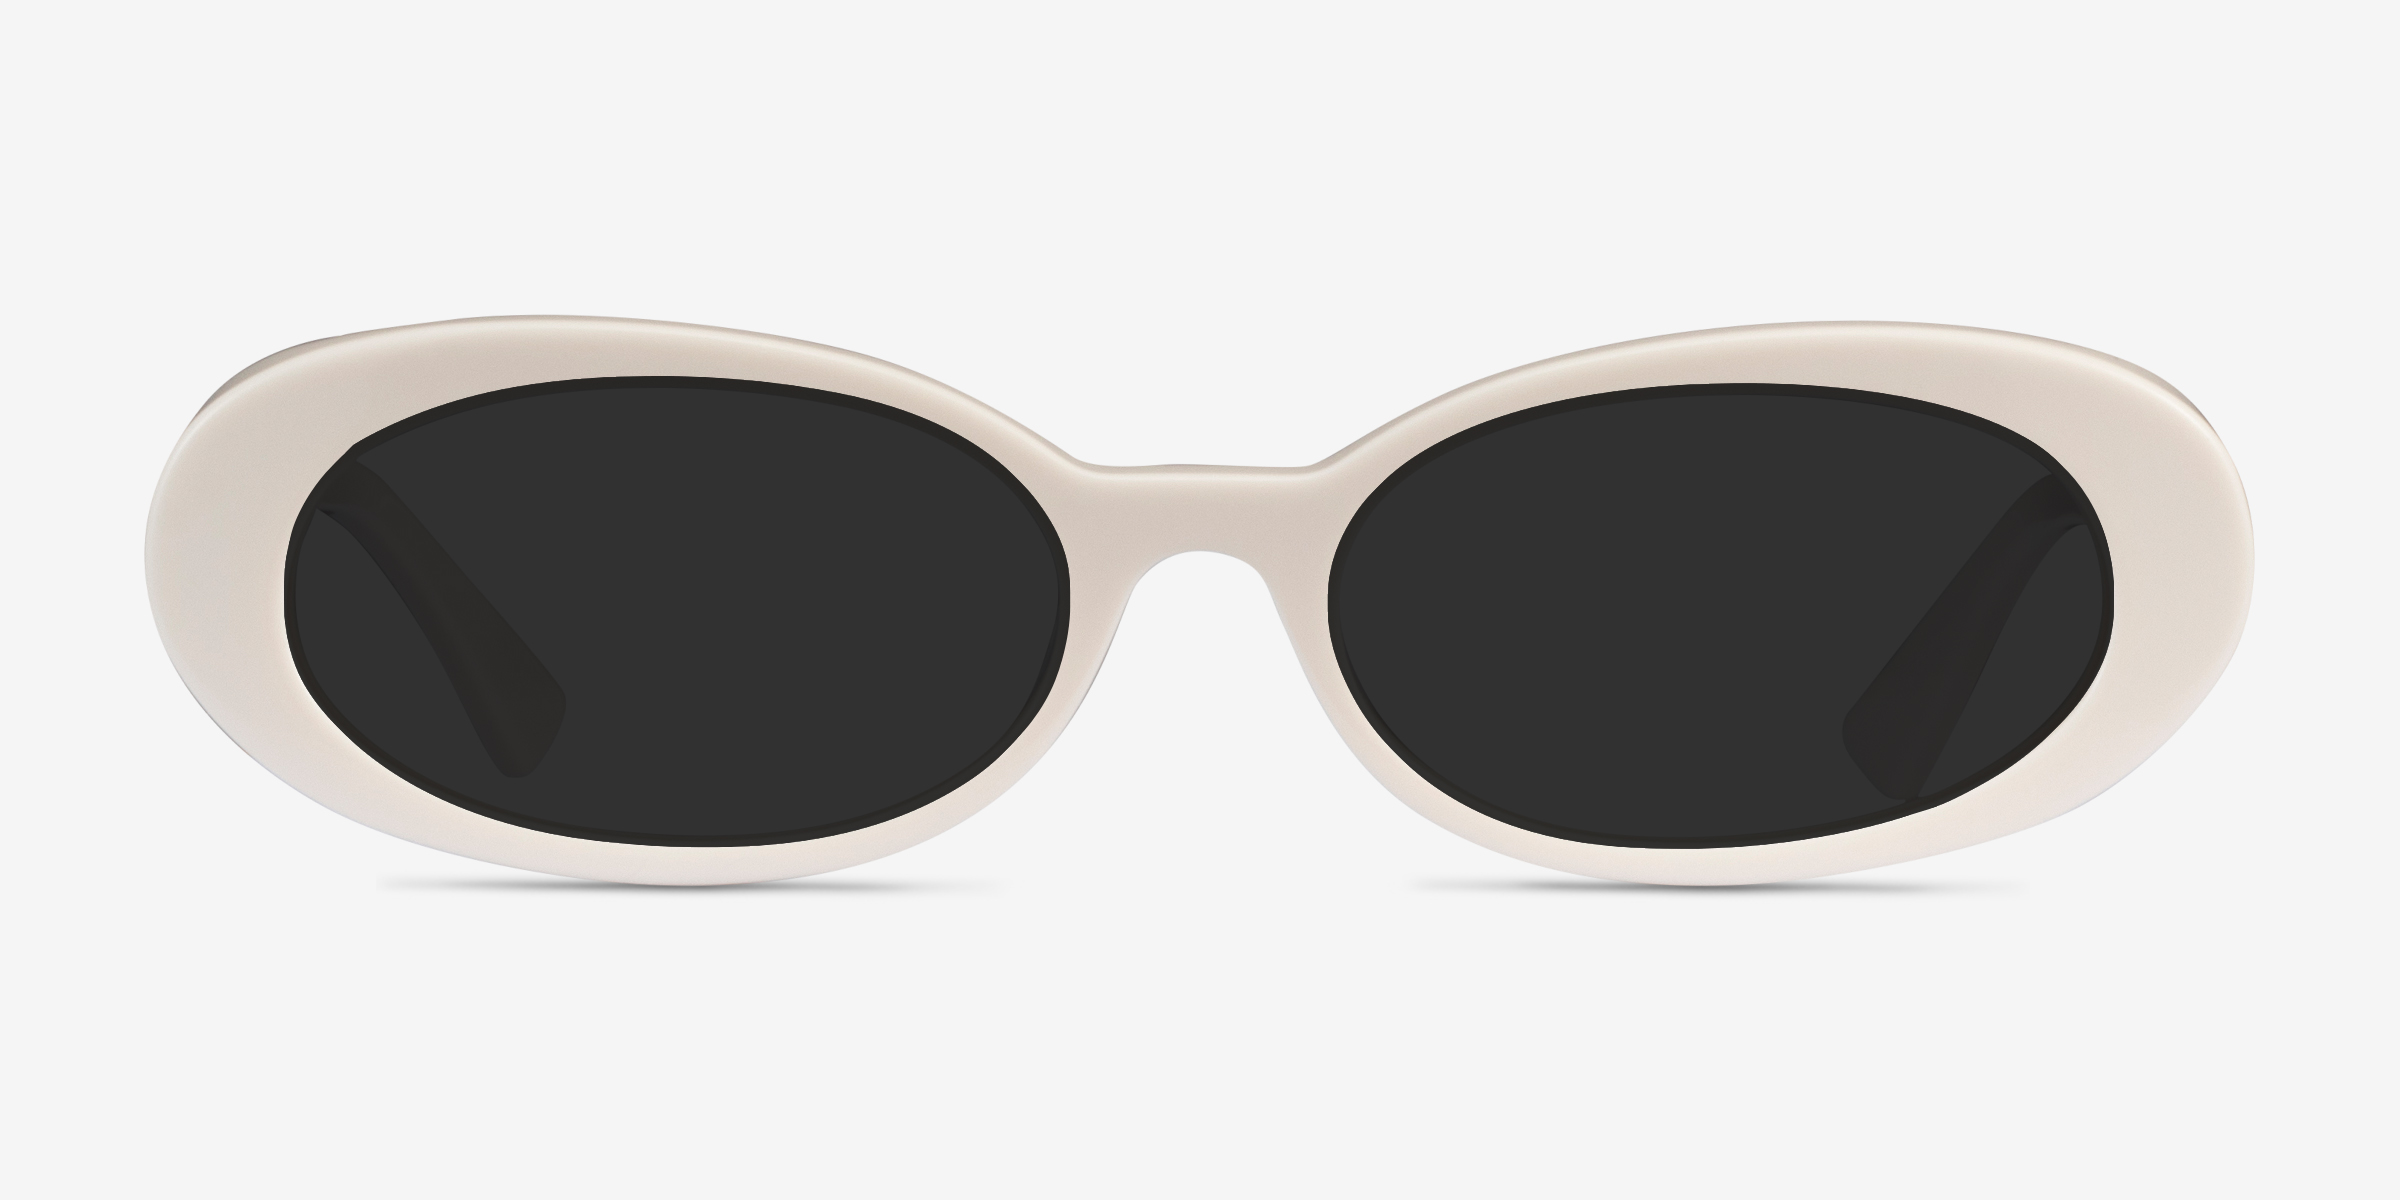 Winona - Oval Beige Frame Sunglasses For Women | Eyebuydirect